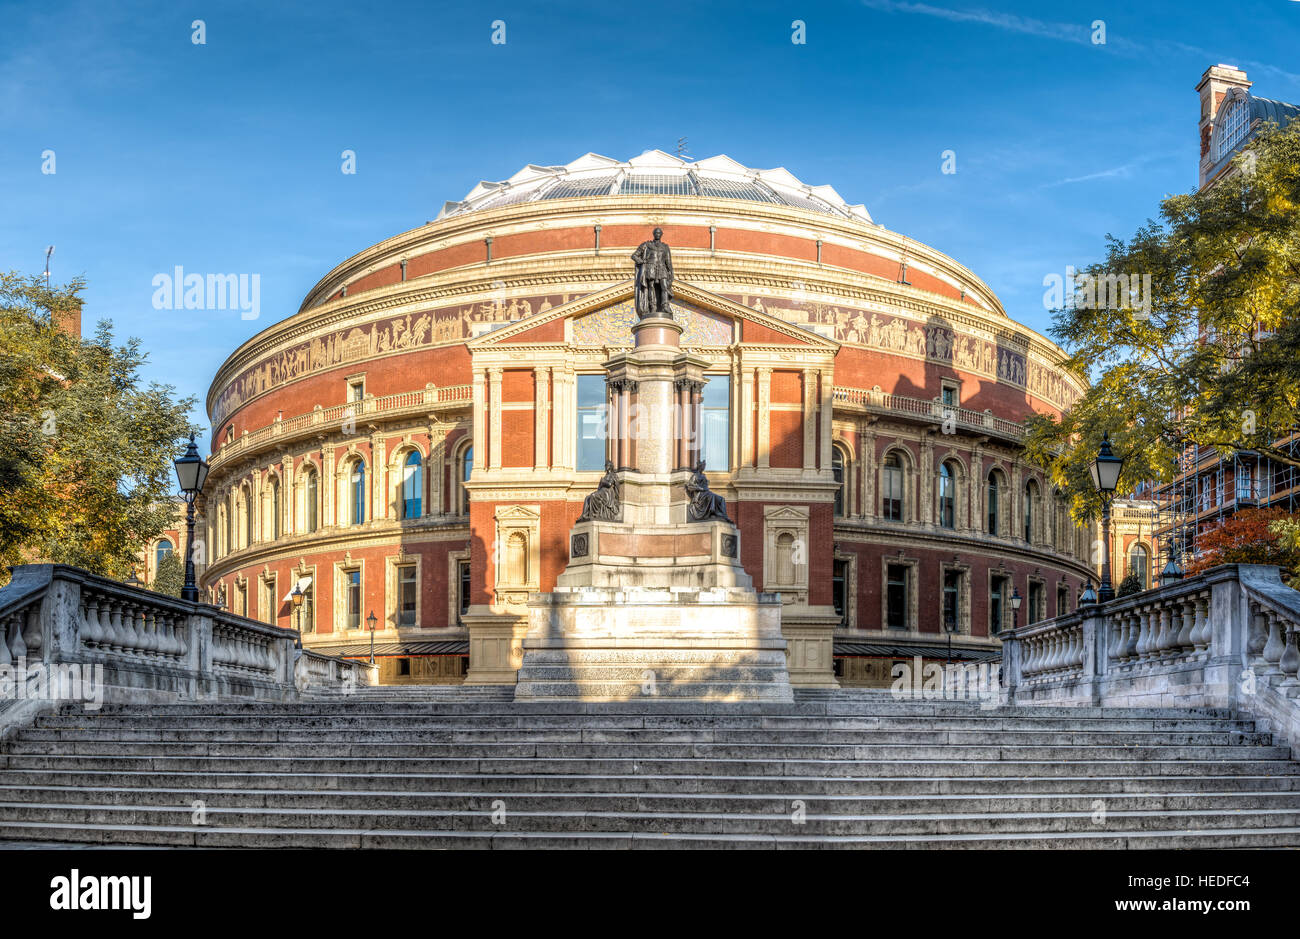 The royal Albert hall in South Kensington London, UK Stock Photo